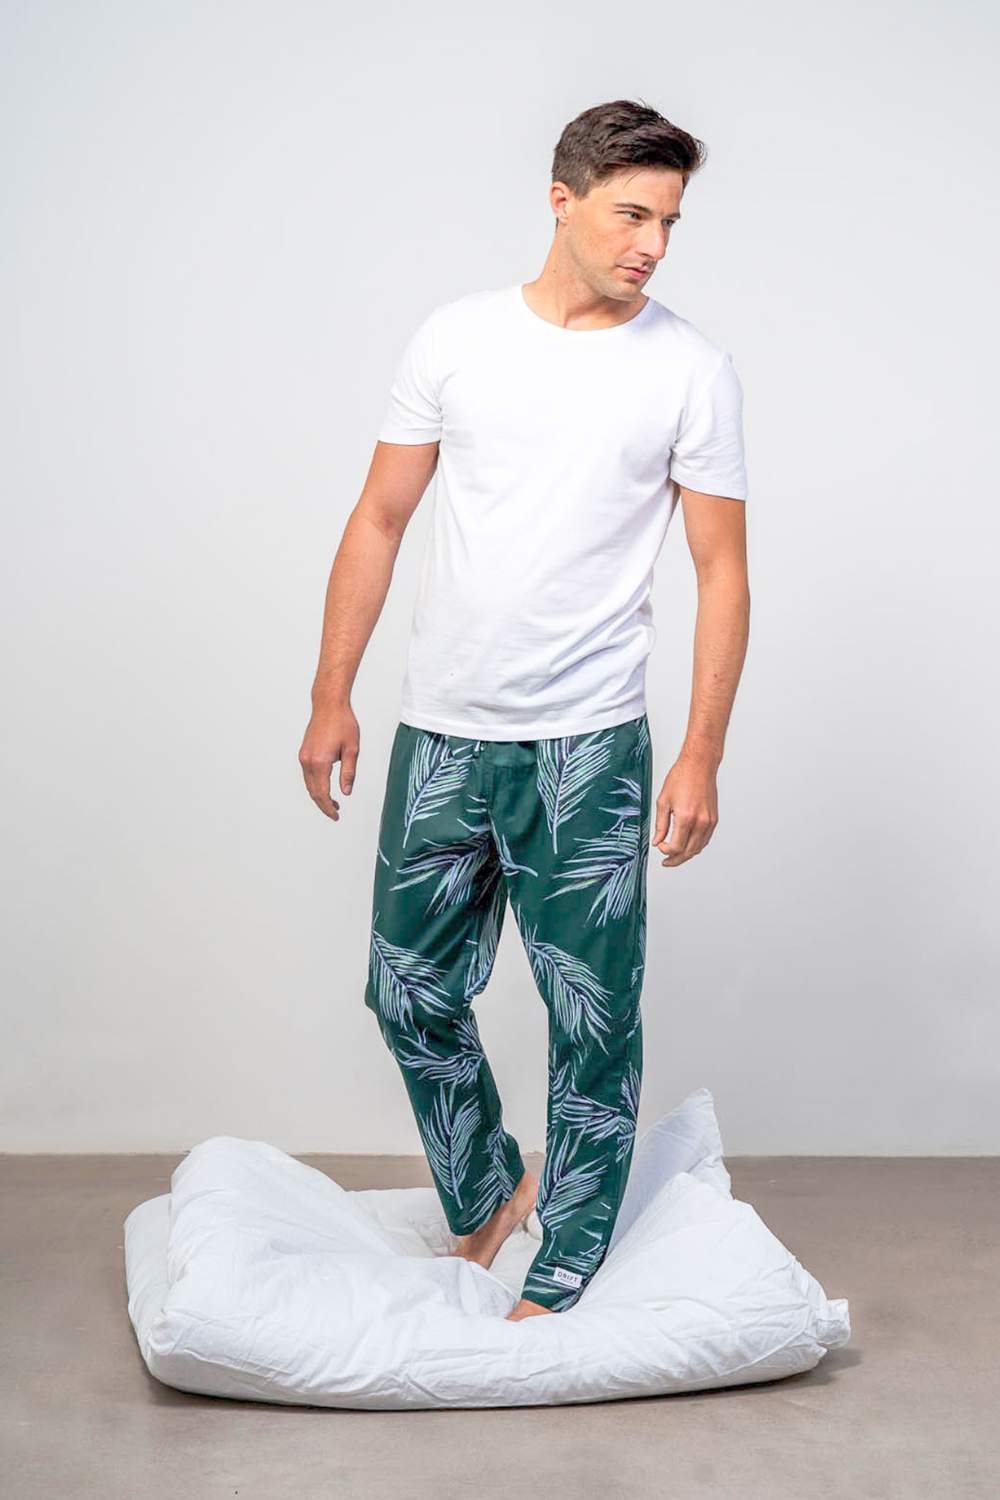 Men's long pyjama bottoms - cabo de rama print dark green